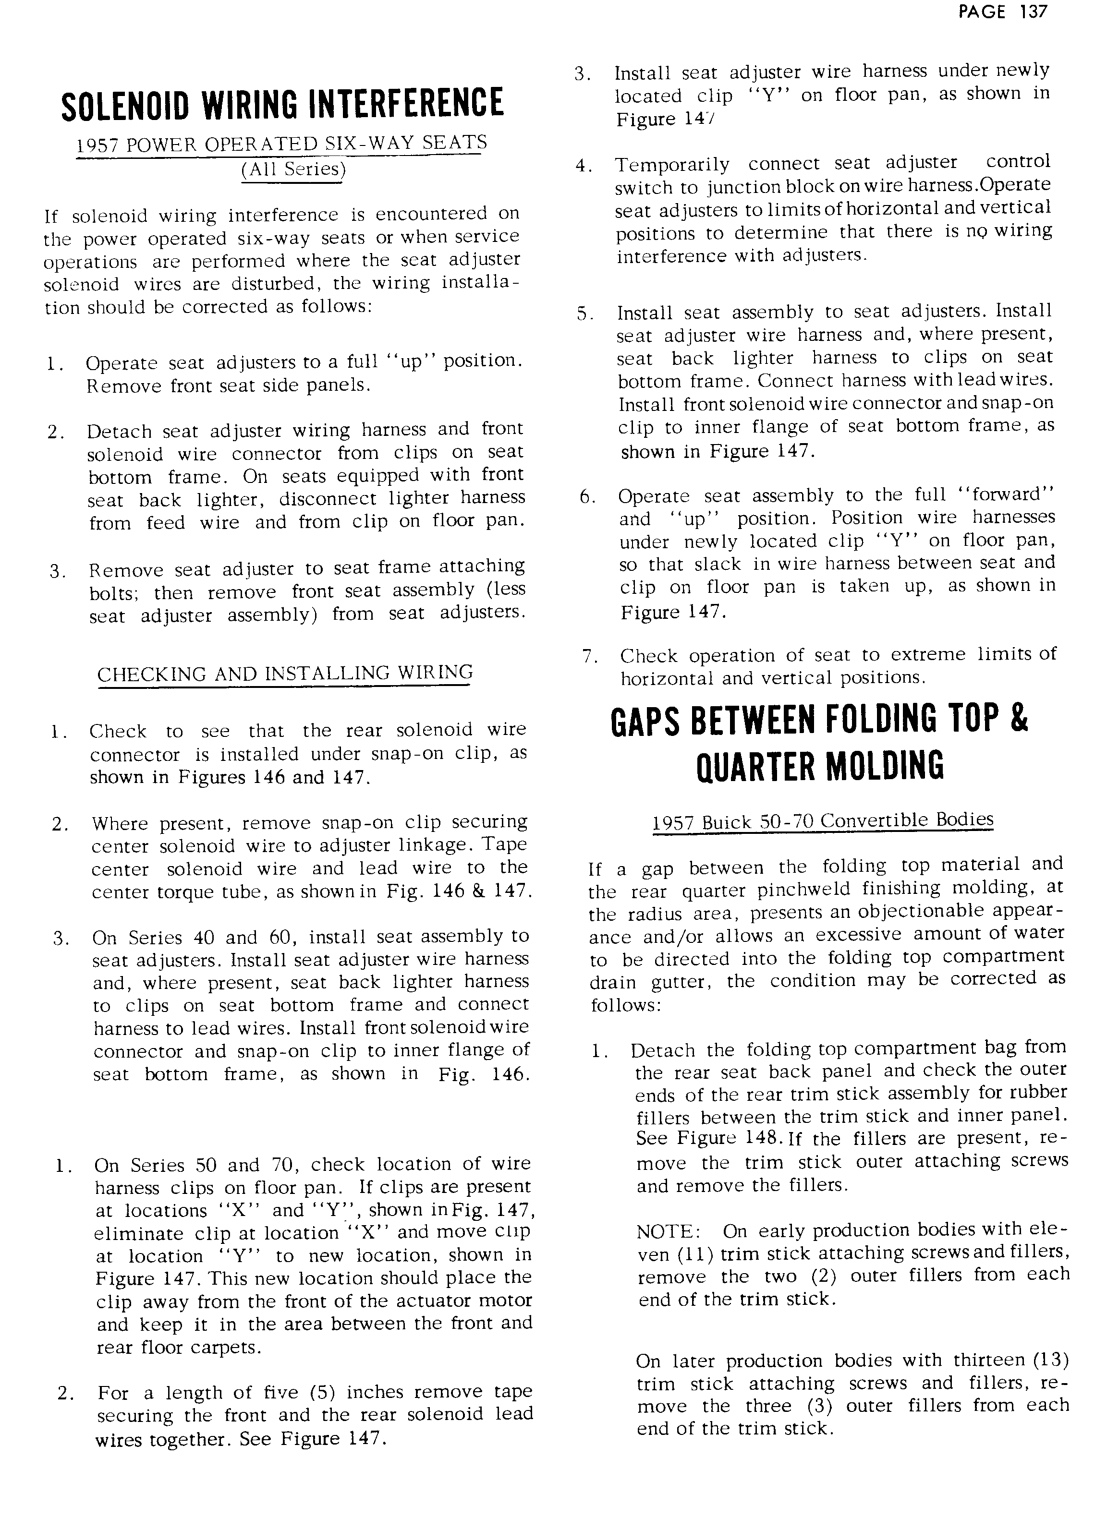 n_1957 Buick Product Service  Bulletins-138-138.jpg